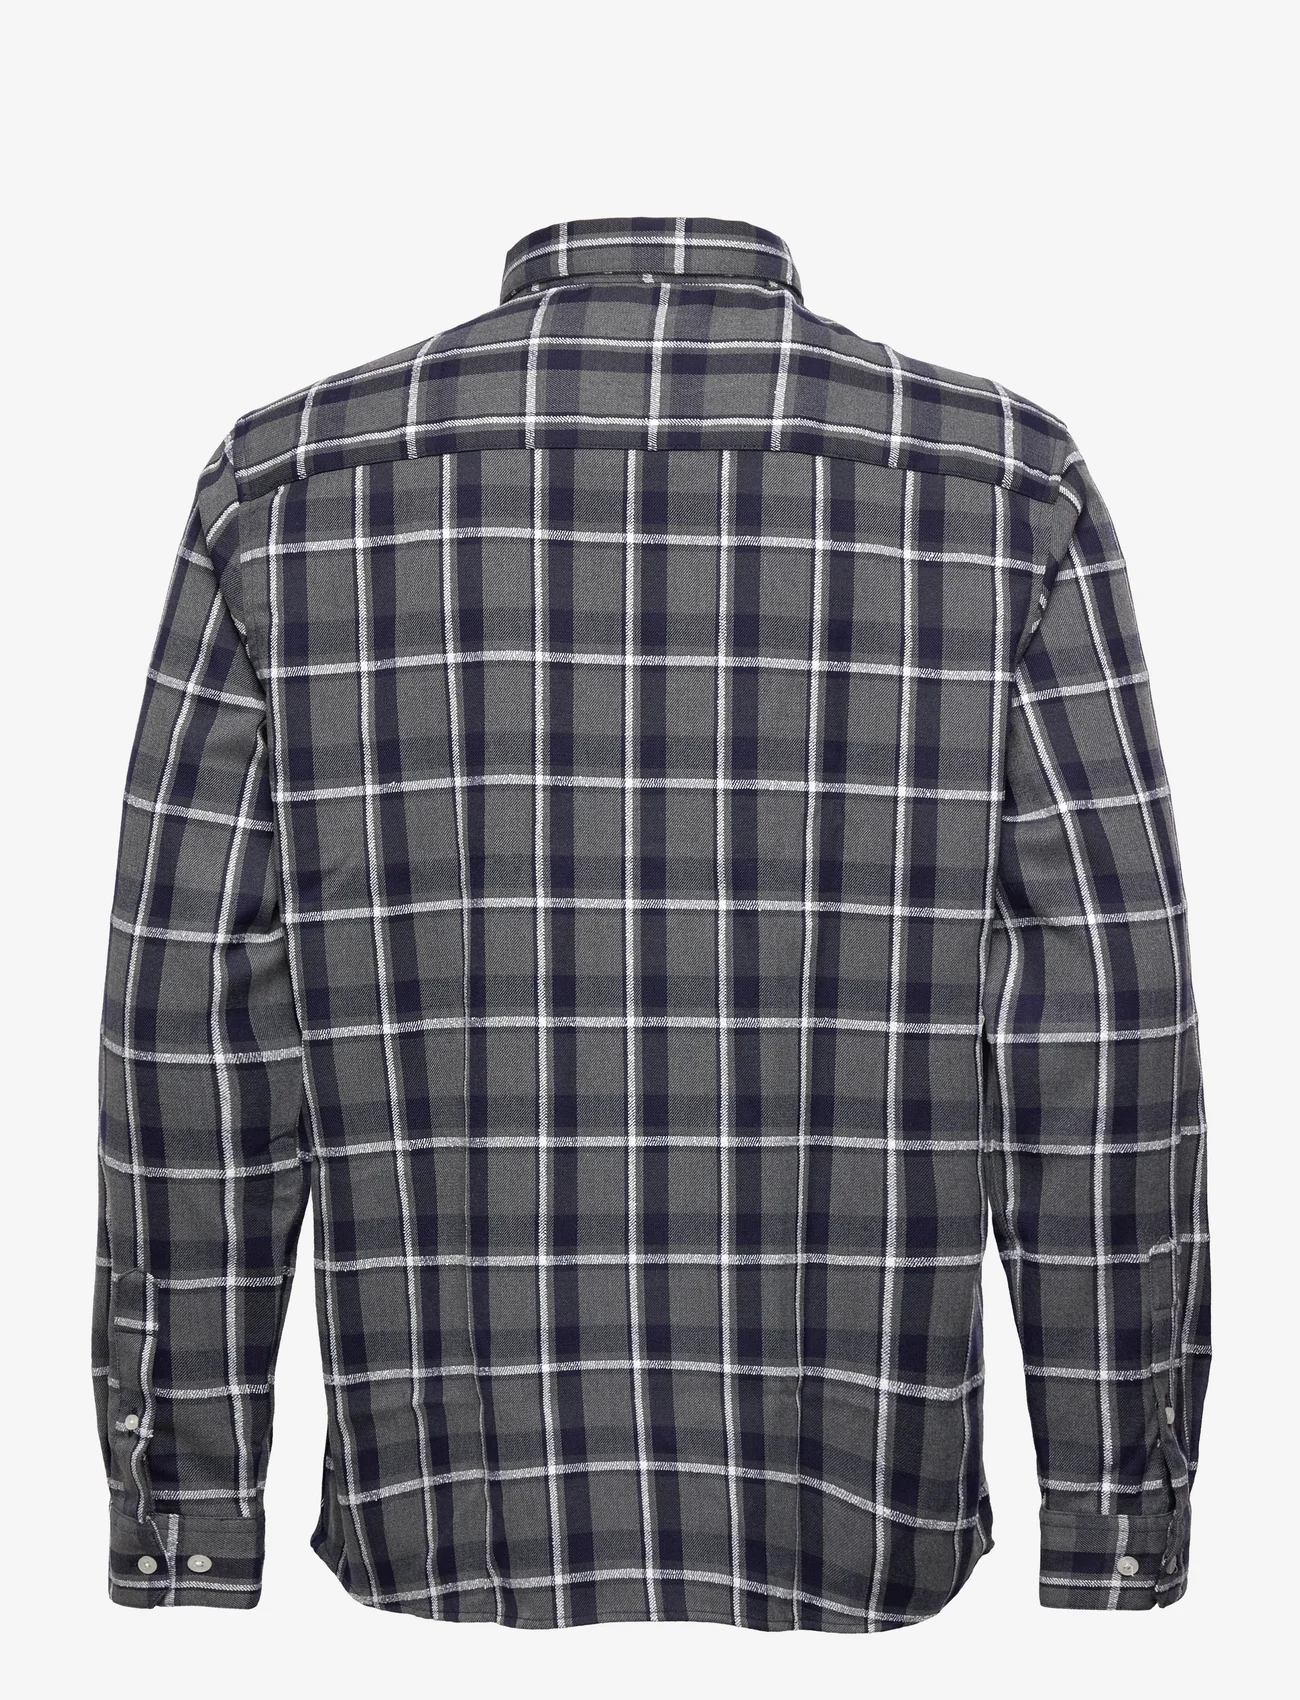 Gabba - York Texture Check LS Shirt - rūtaini krekli - multi check - 1